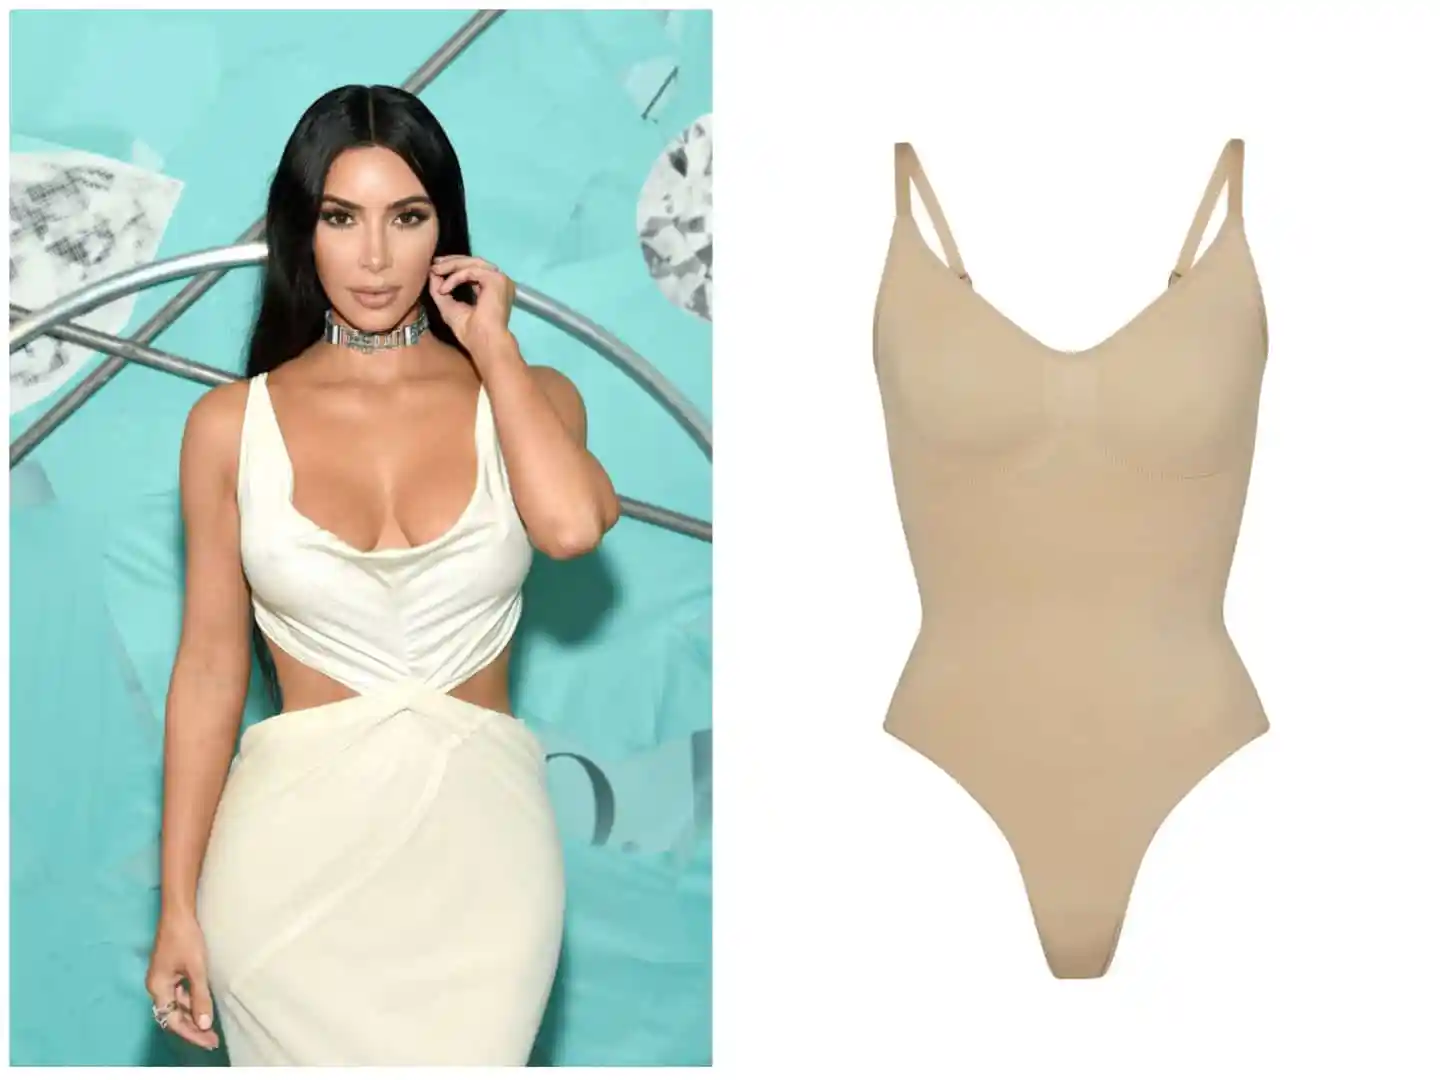 Kim Kardashian says Skims is making its popular bodysuit more inclusive